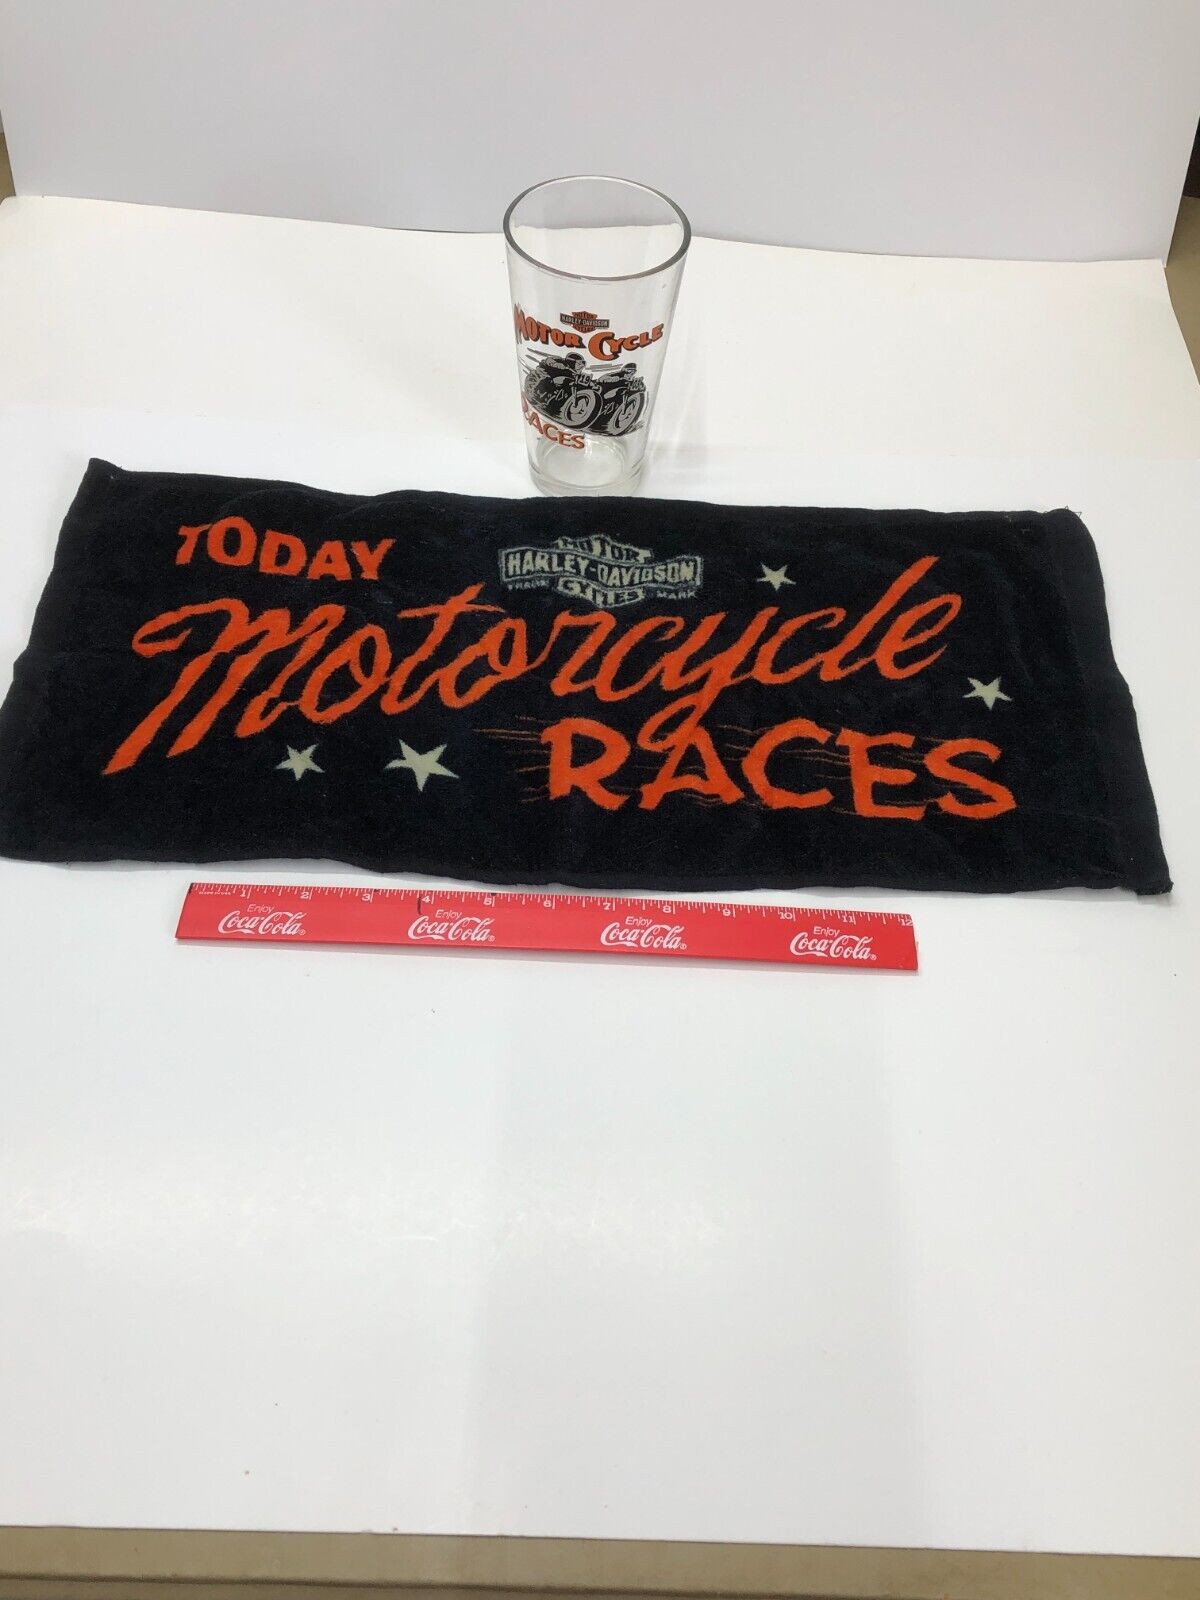 Harley Davidson Motorcycle Races Glass and Display Rag